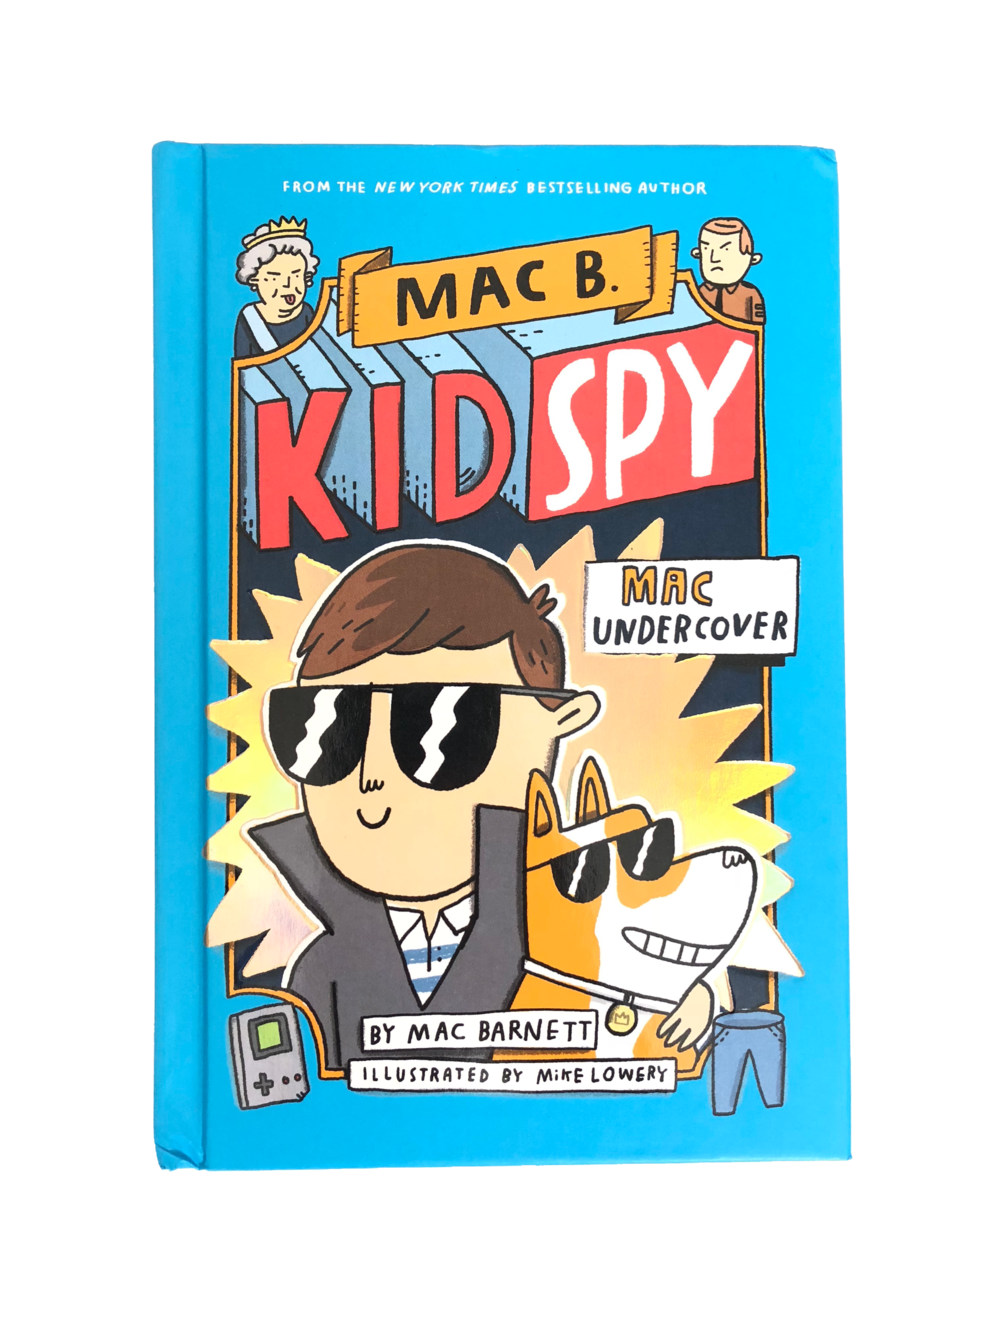 Mac B Kid Spy 1 Mac Undercover Mac Barnett